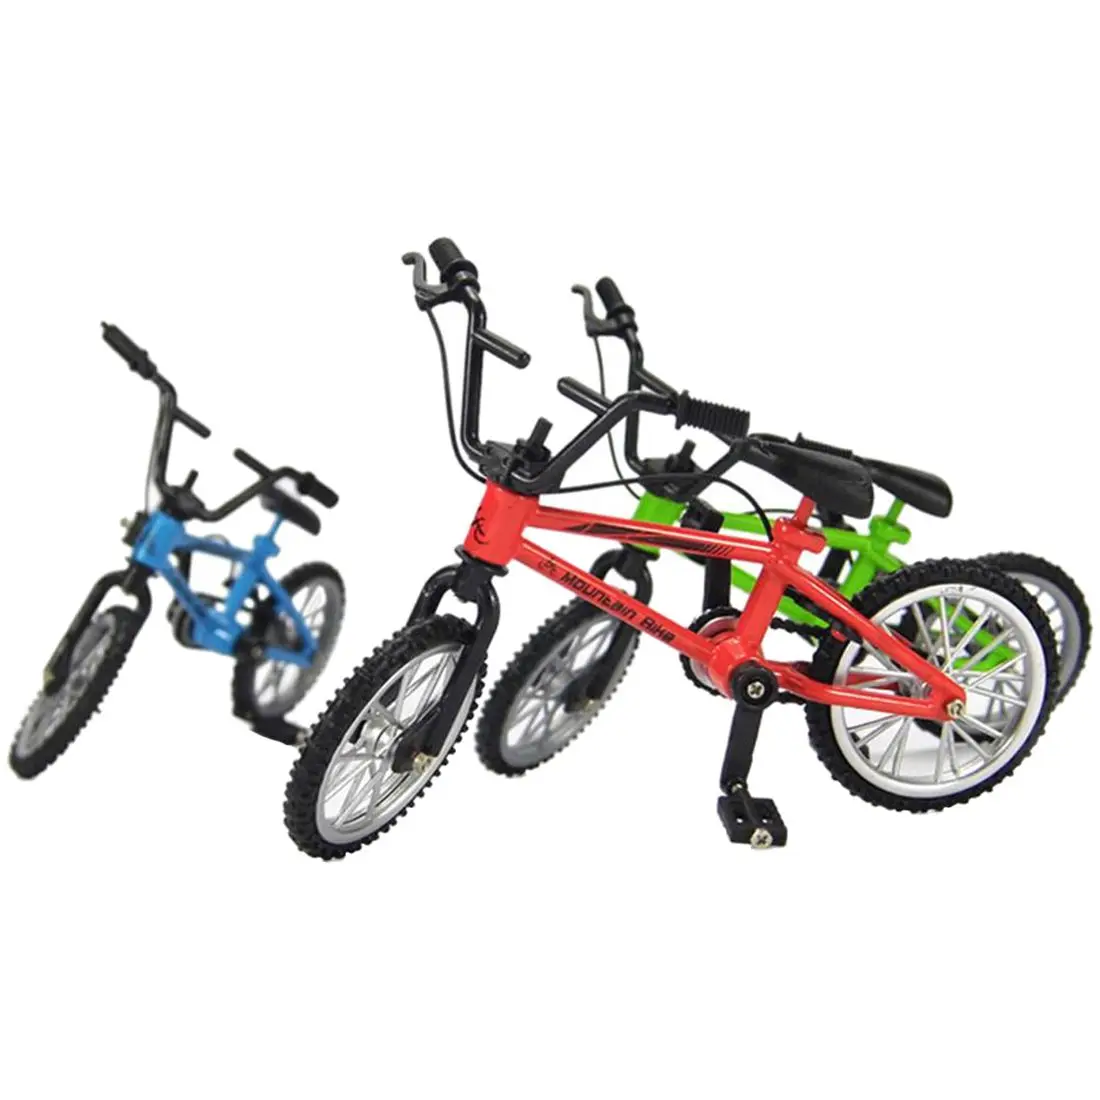 Палец Велосипед+ палец доска мальчик малыш дети колеса игрушки BMX S